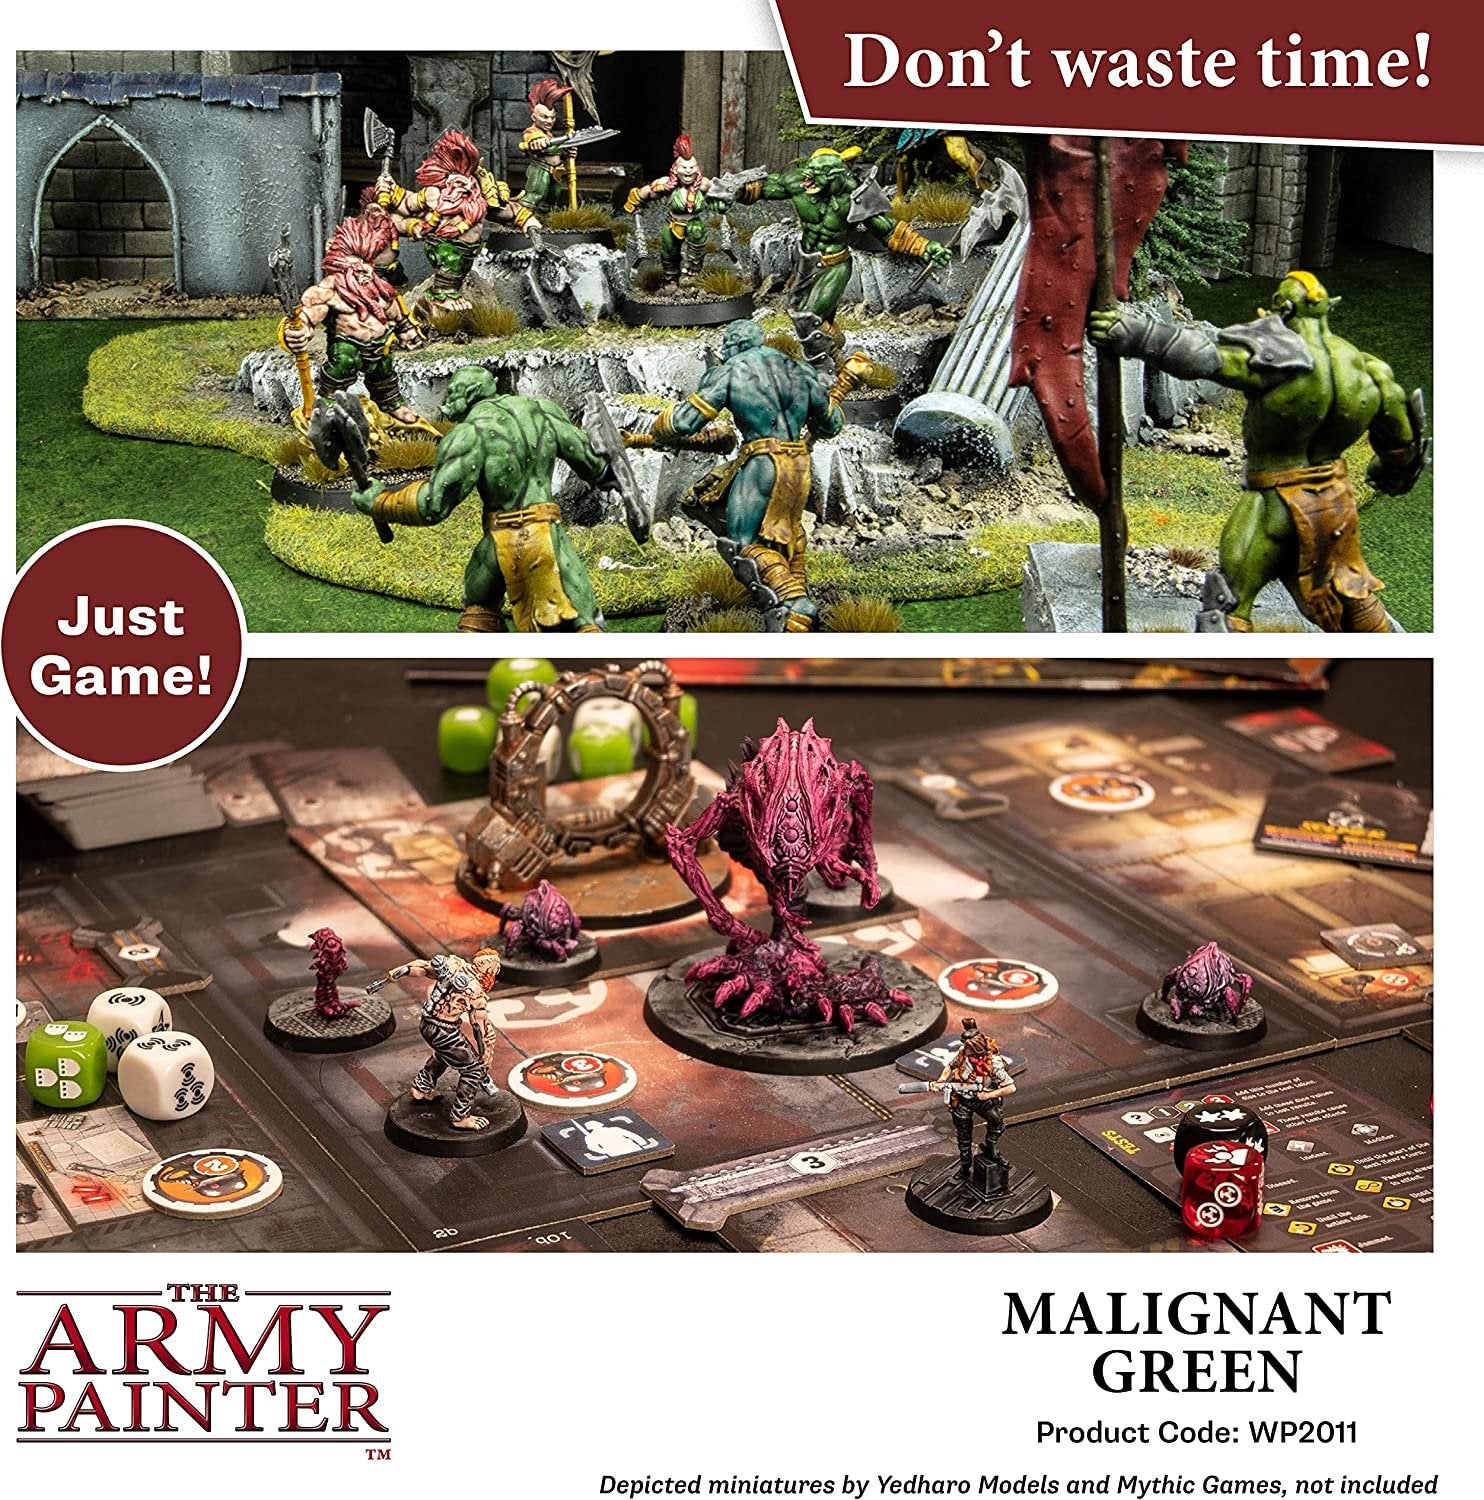 The Army Painter - Speedpaints: Malignant Green (18ml/0.6oz)